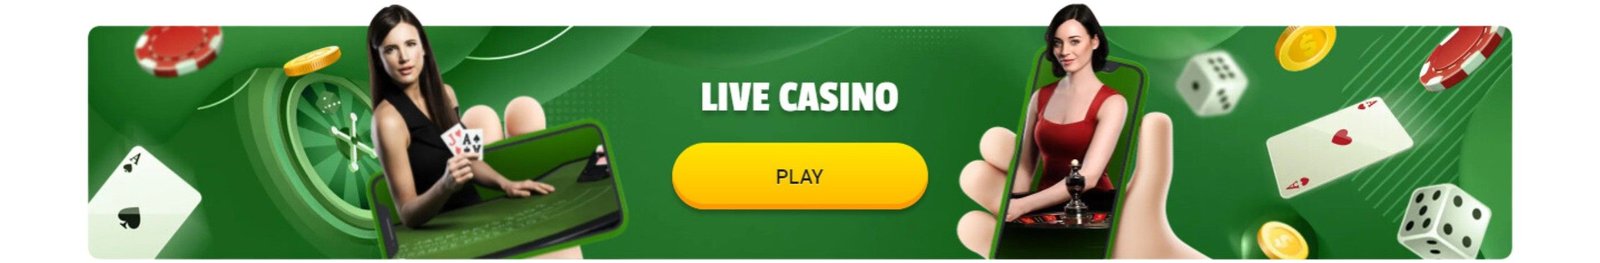 Live Casino - Play CTA